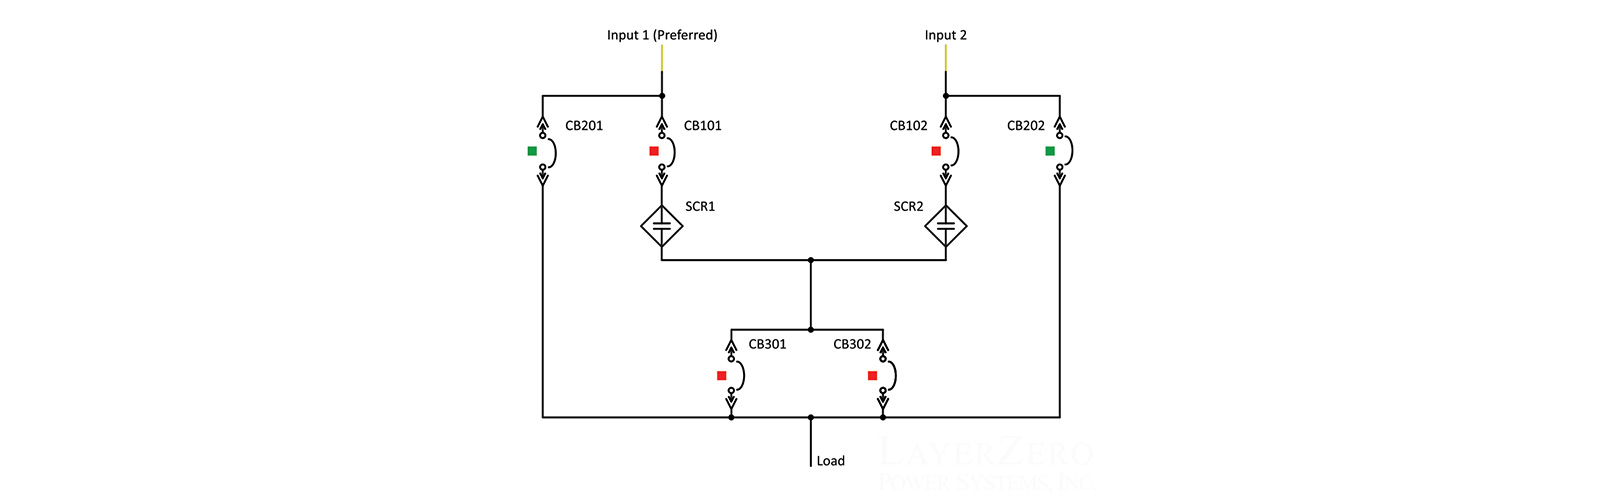 Static Transfer Switch Schematic Diagram